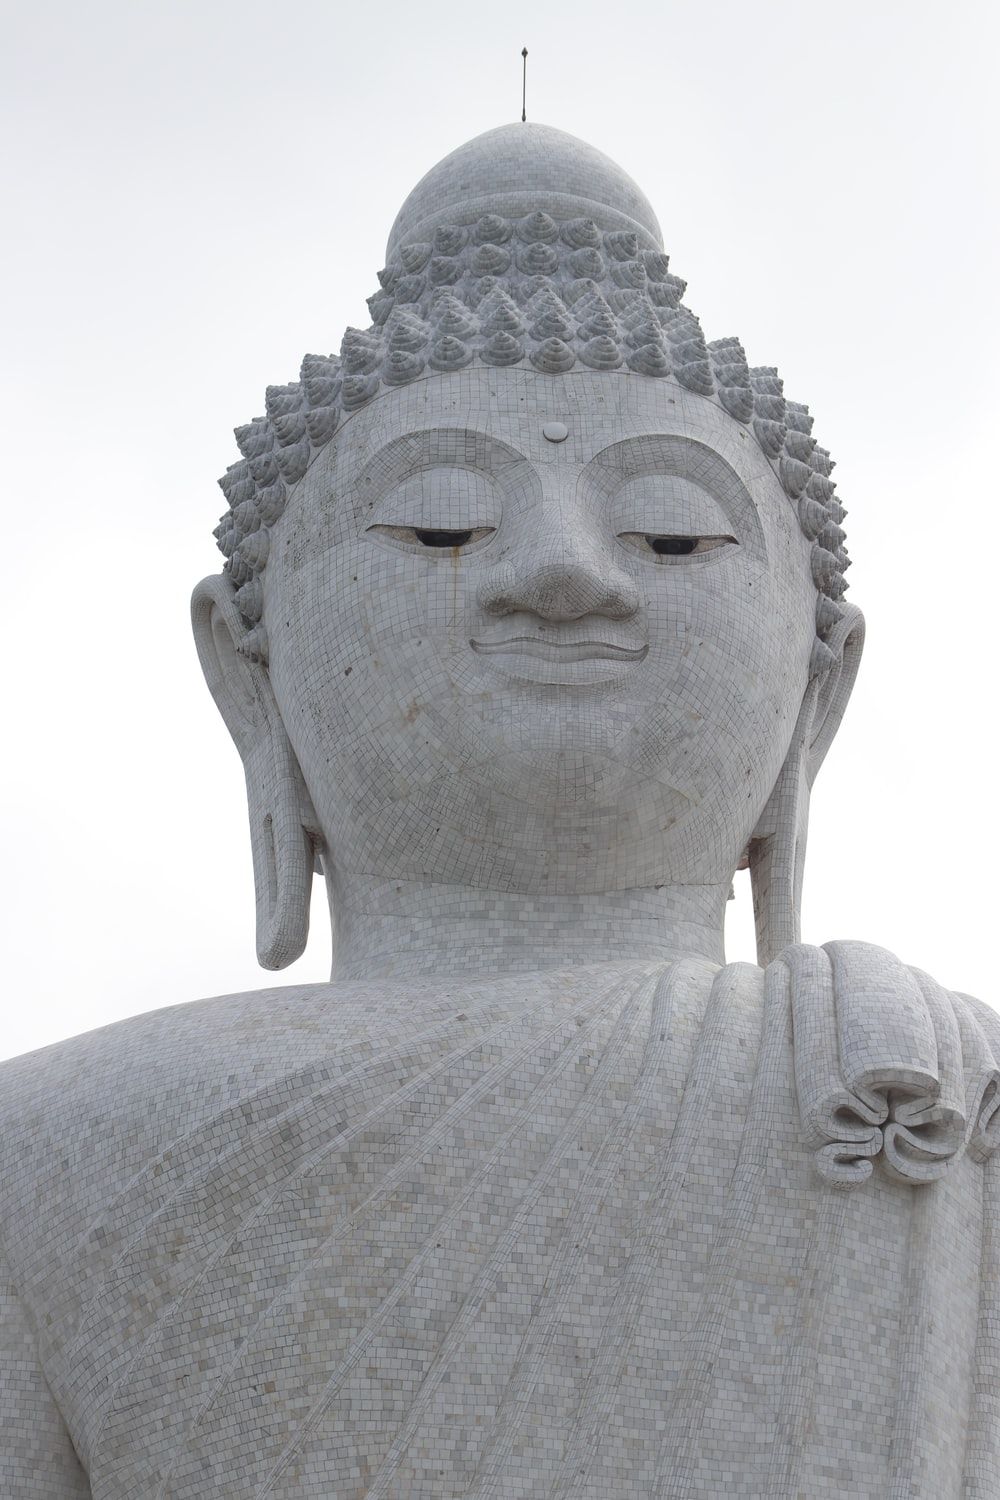 Big Buddha Picture. Download Free .com